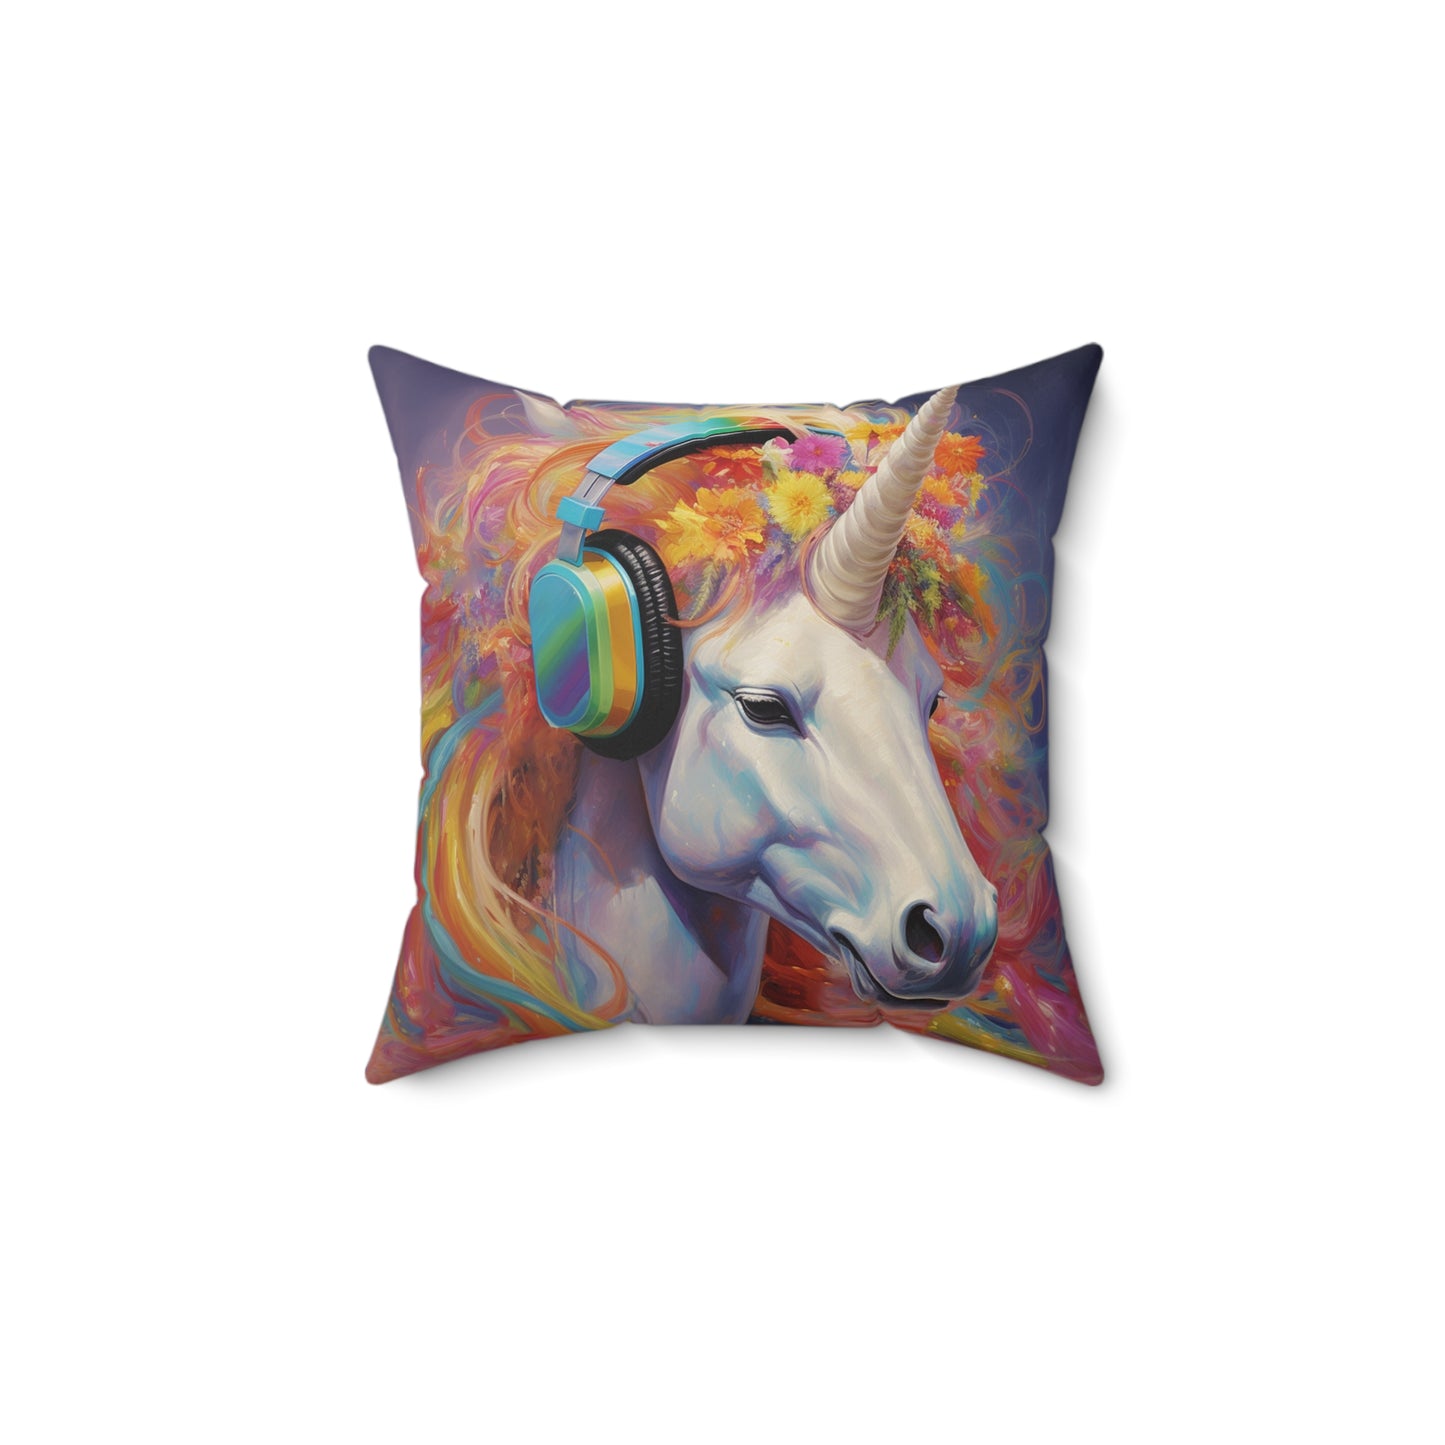 Unicorn Square Pillow